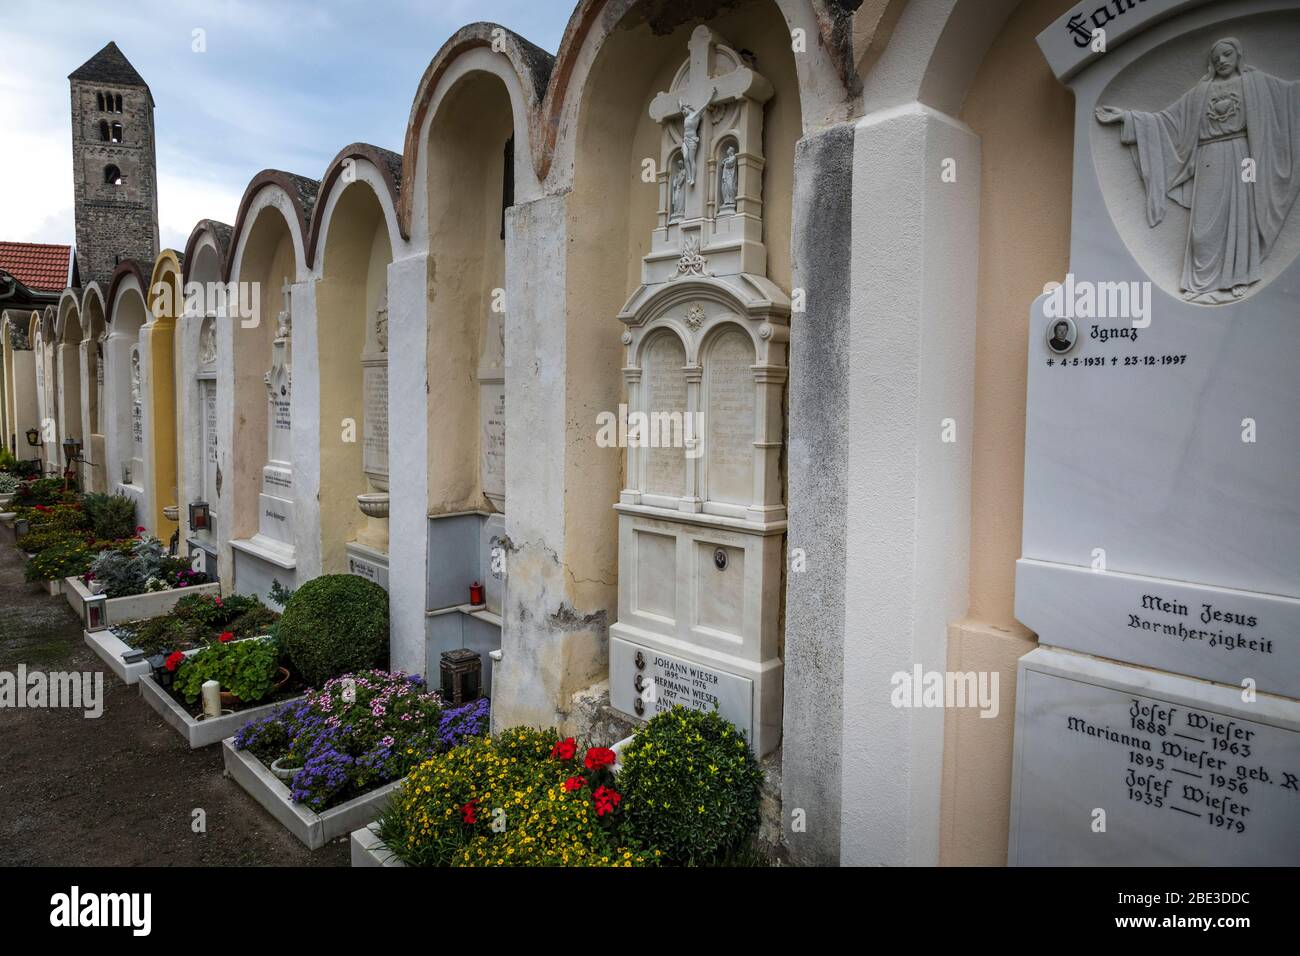 A row of ornate headstones and memorials in a cemetery in Malles Venosta (Mals Venosta), Italy Stock Photo